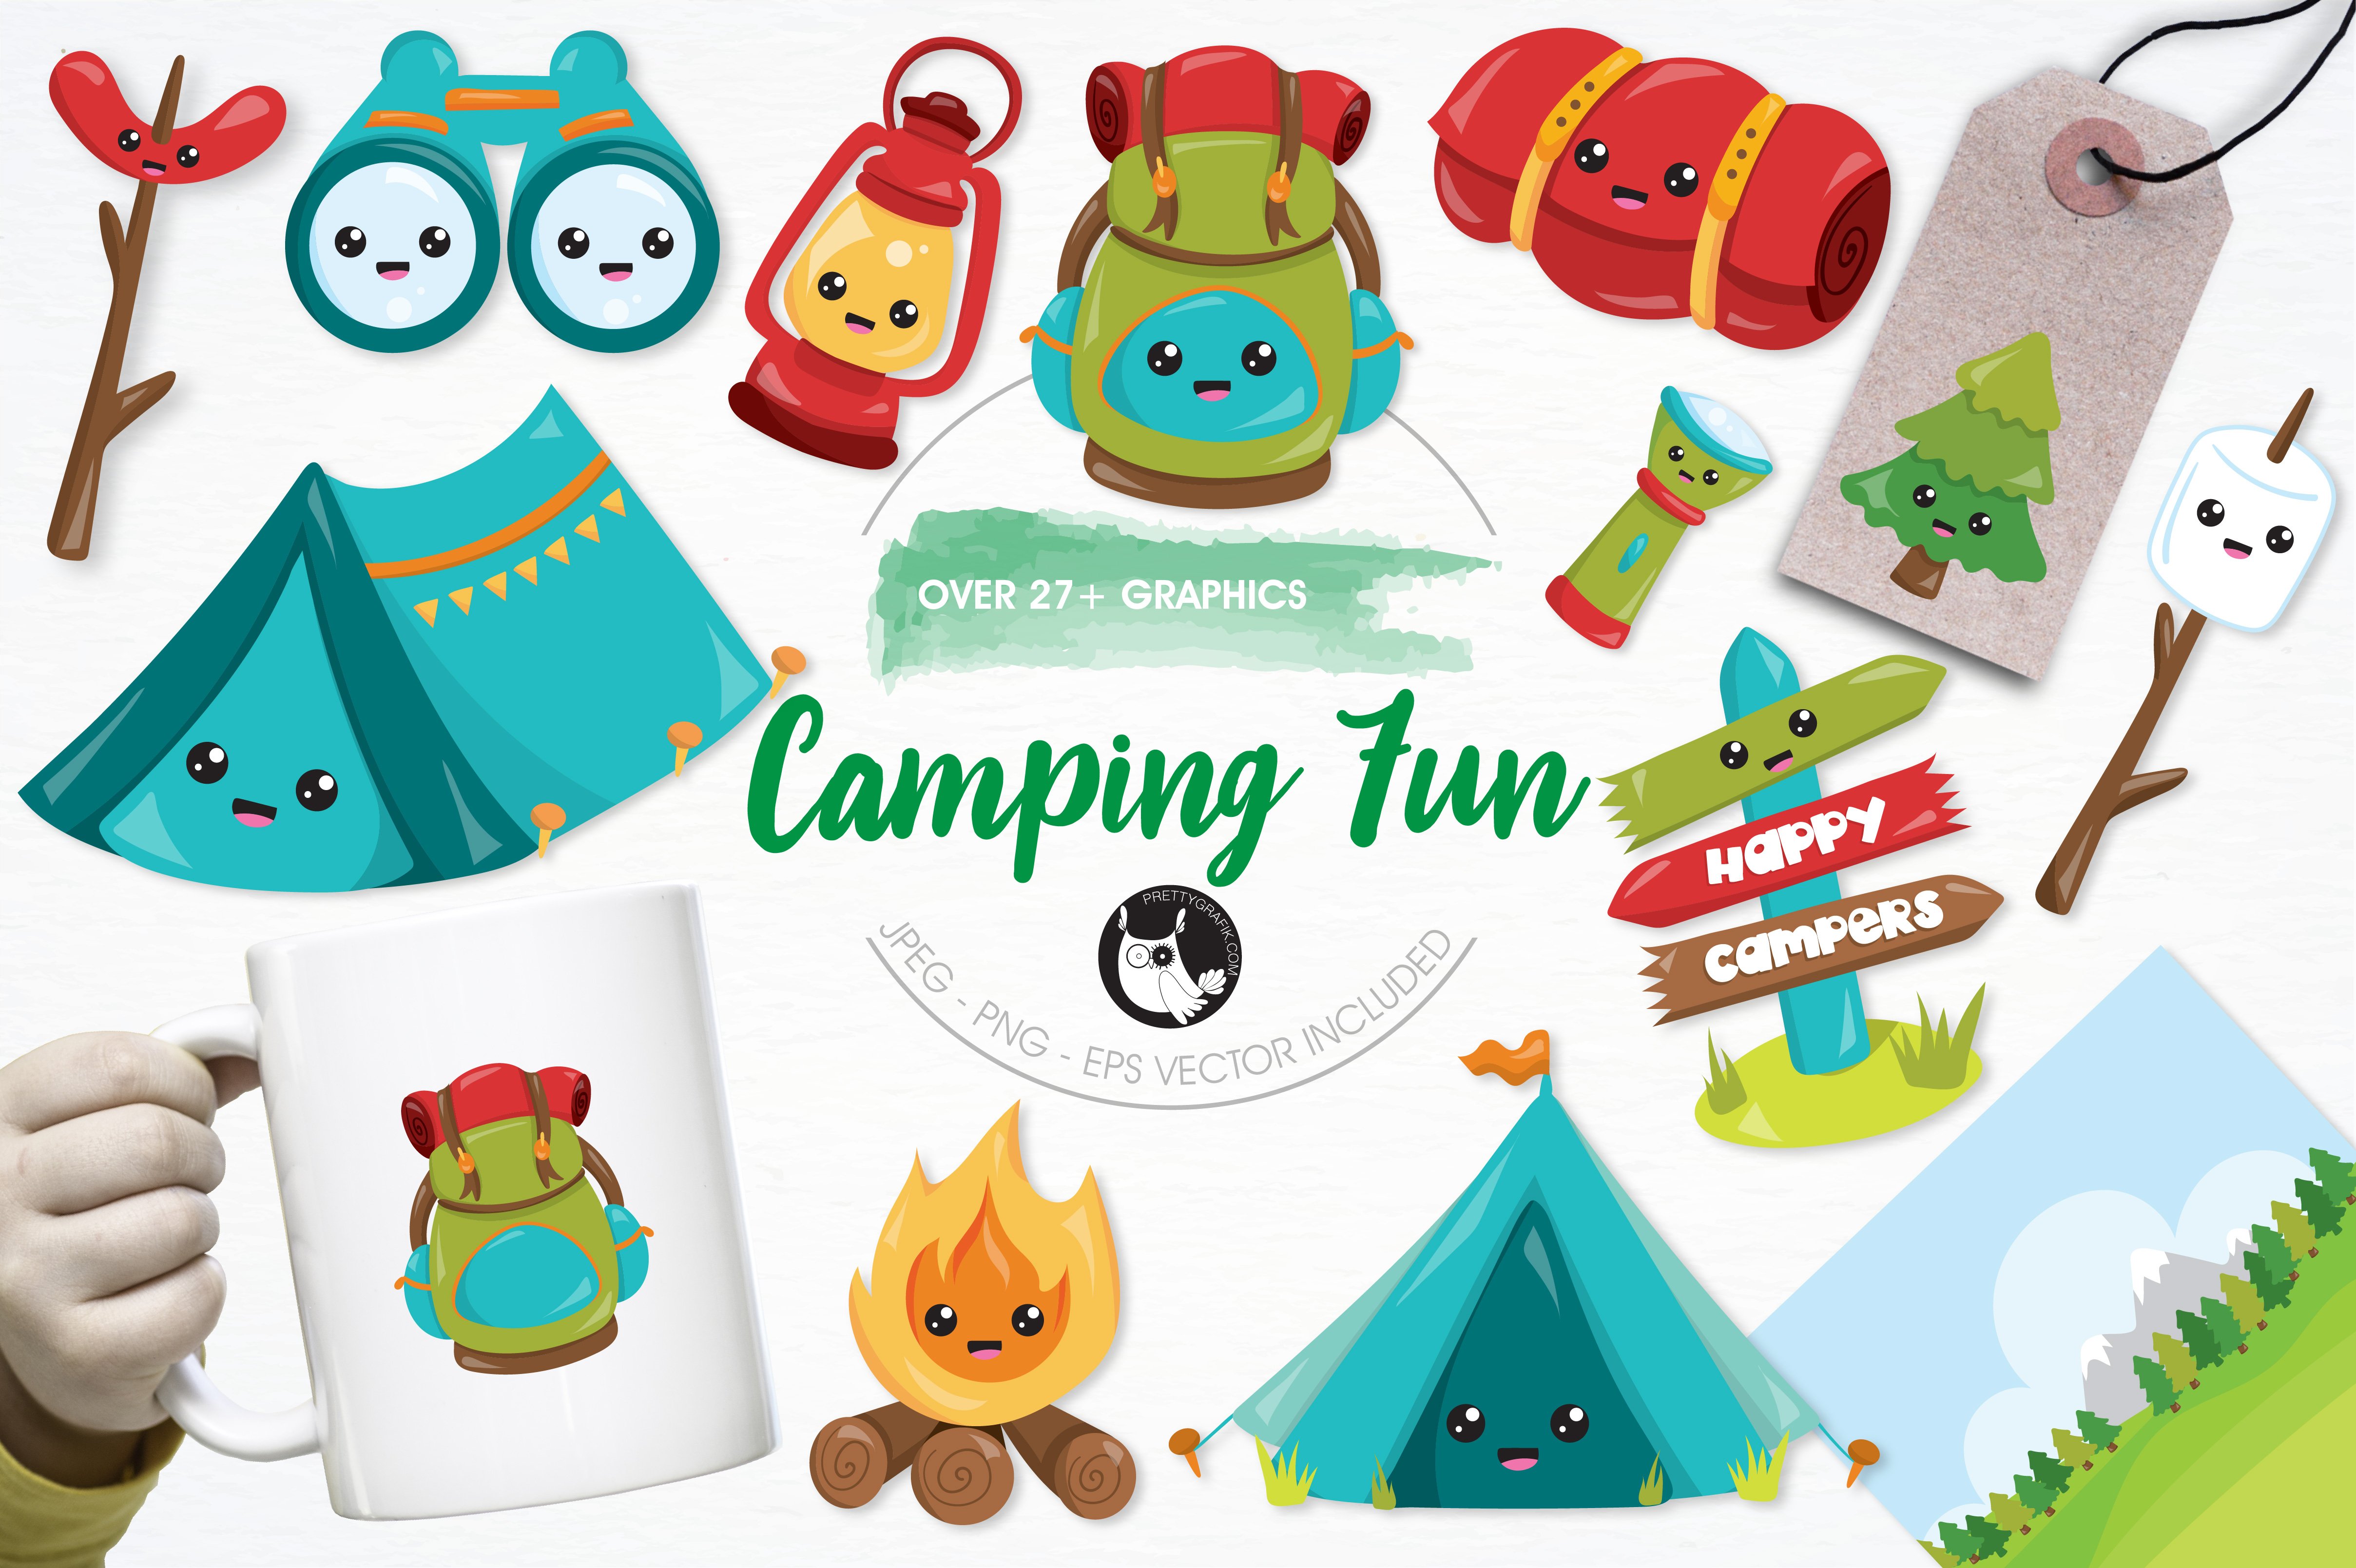 Camping fun illustration pack - Vector Image